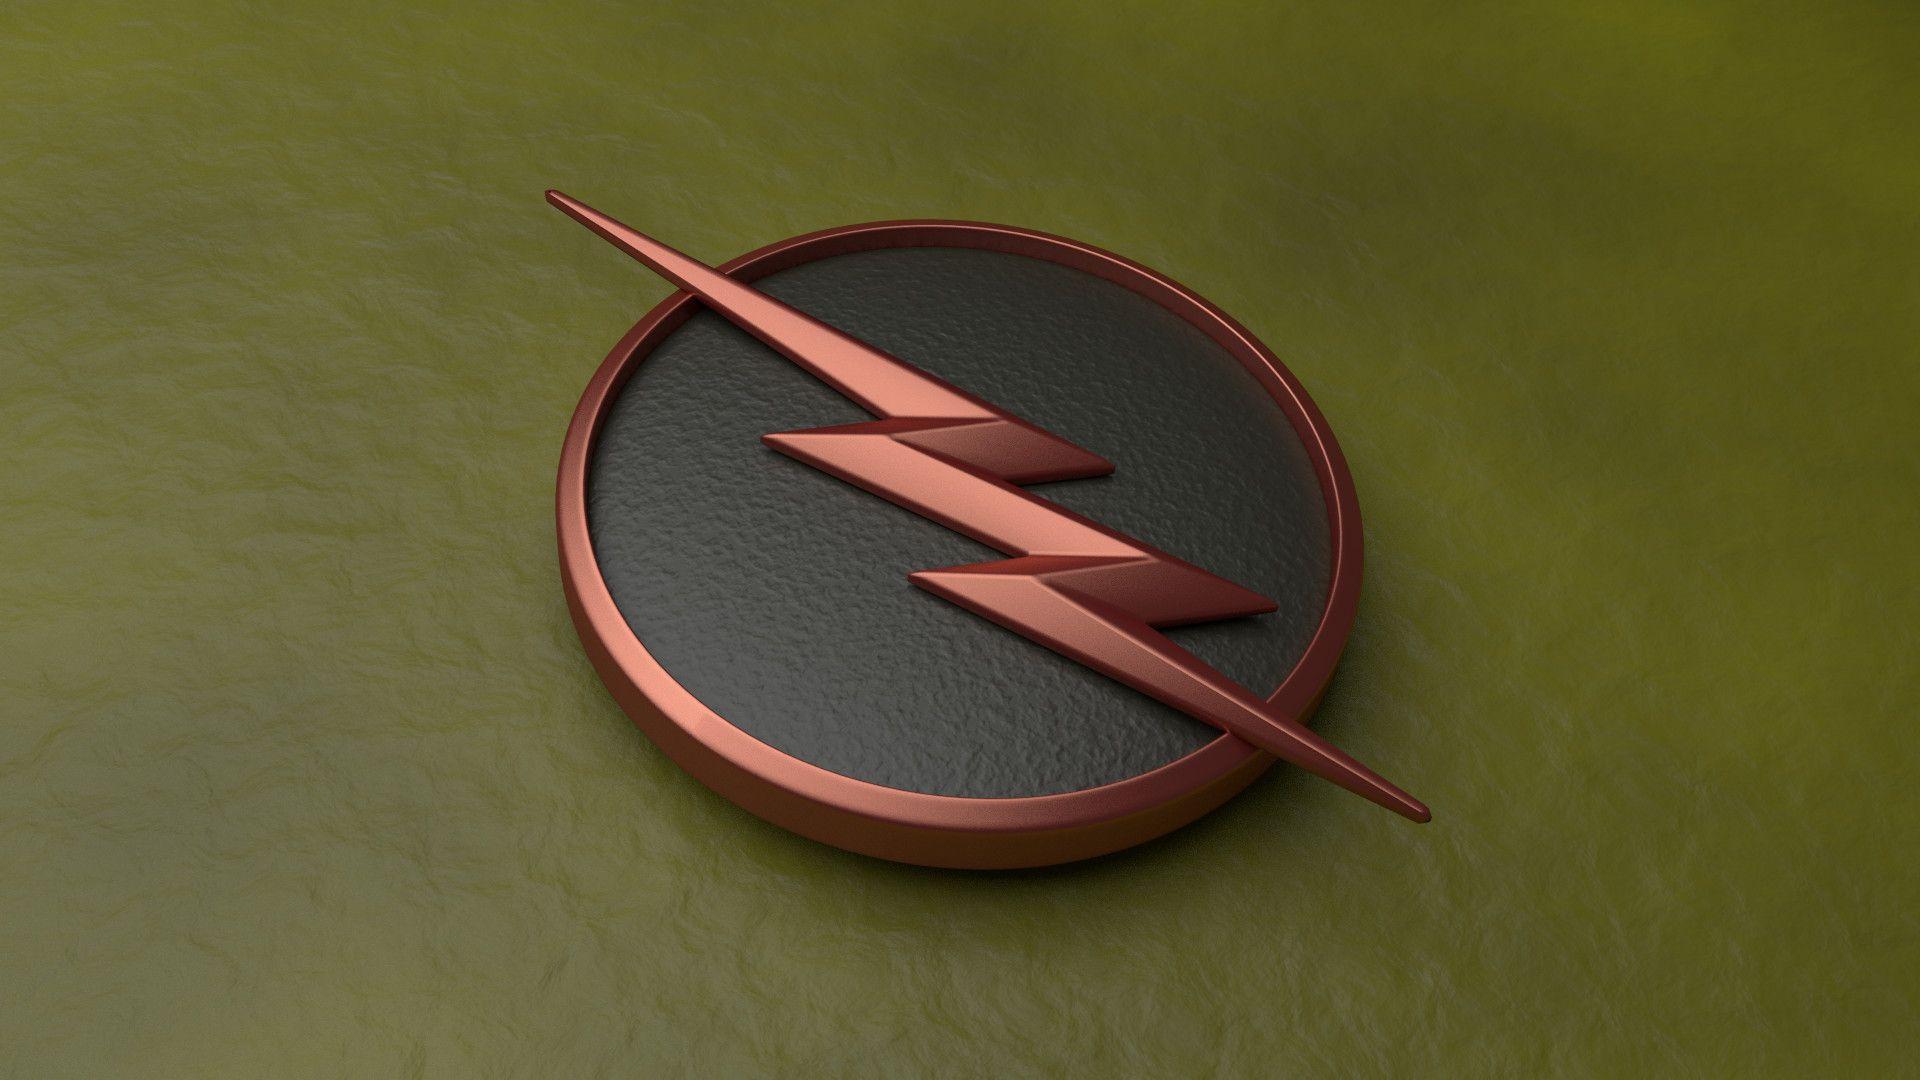 Inspired By U IcedJack, I Also Made The Flash Logo In Blender